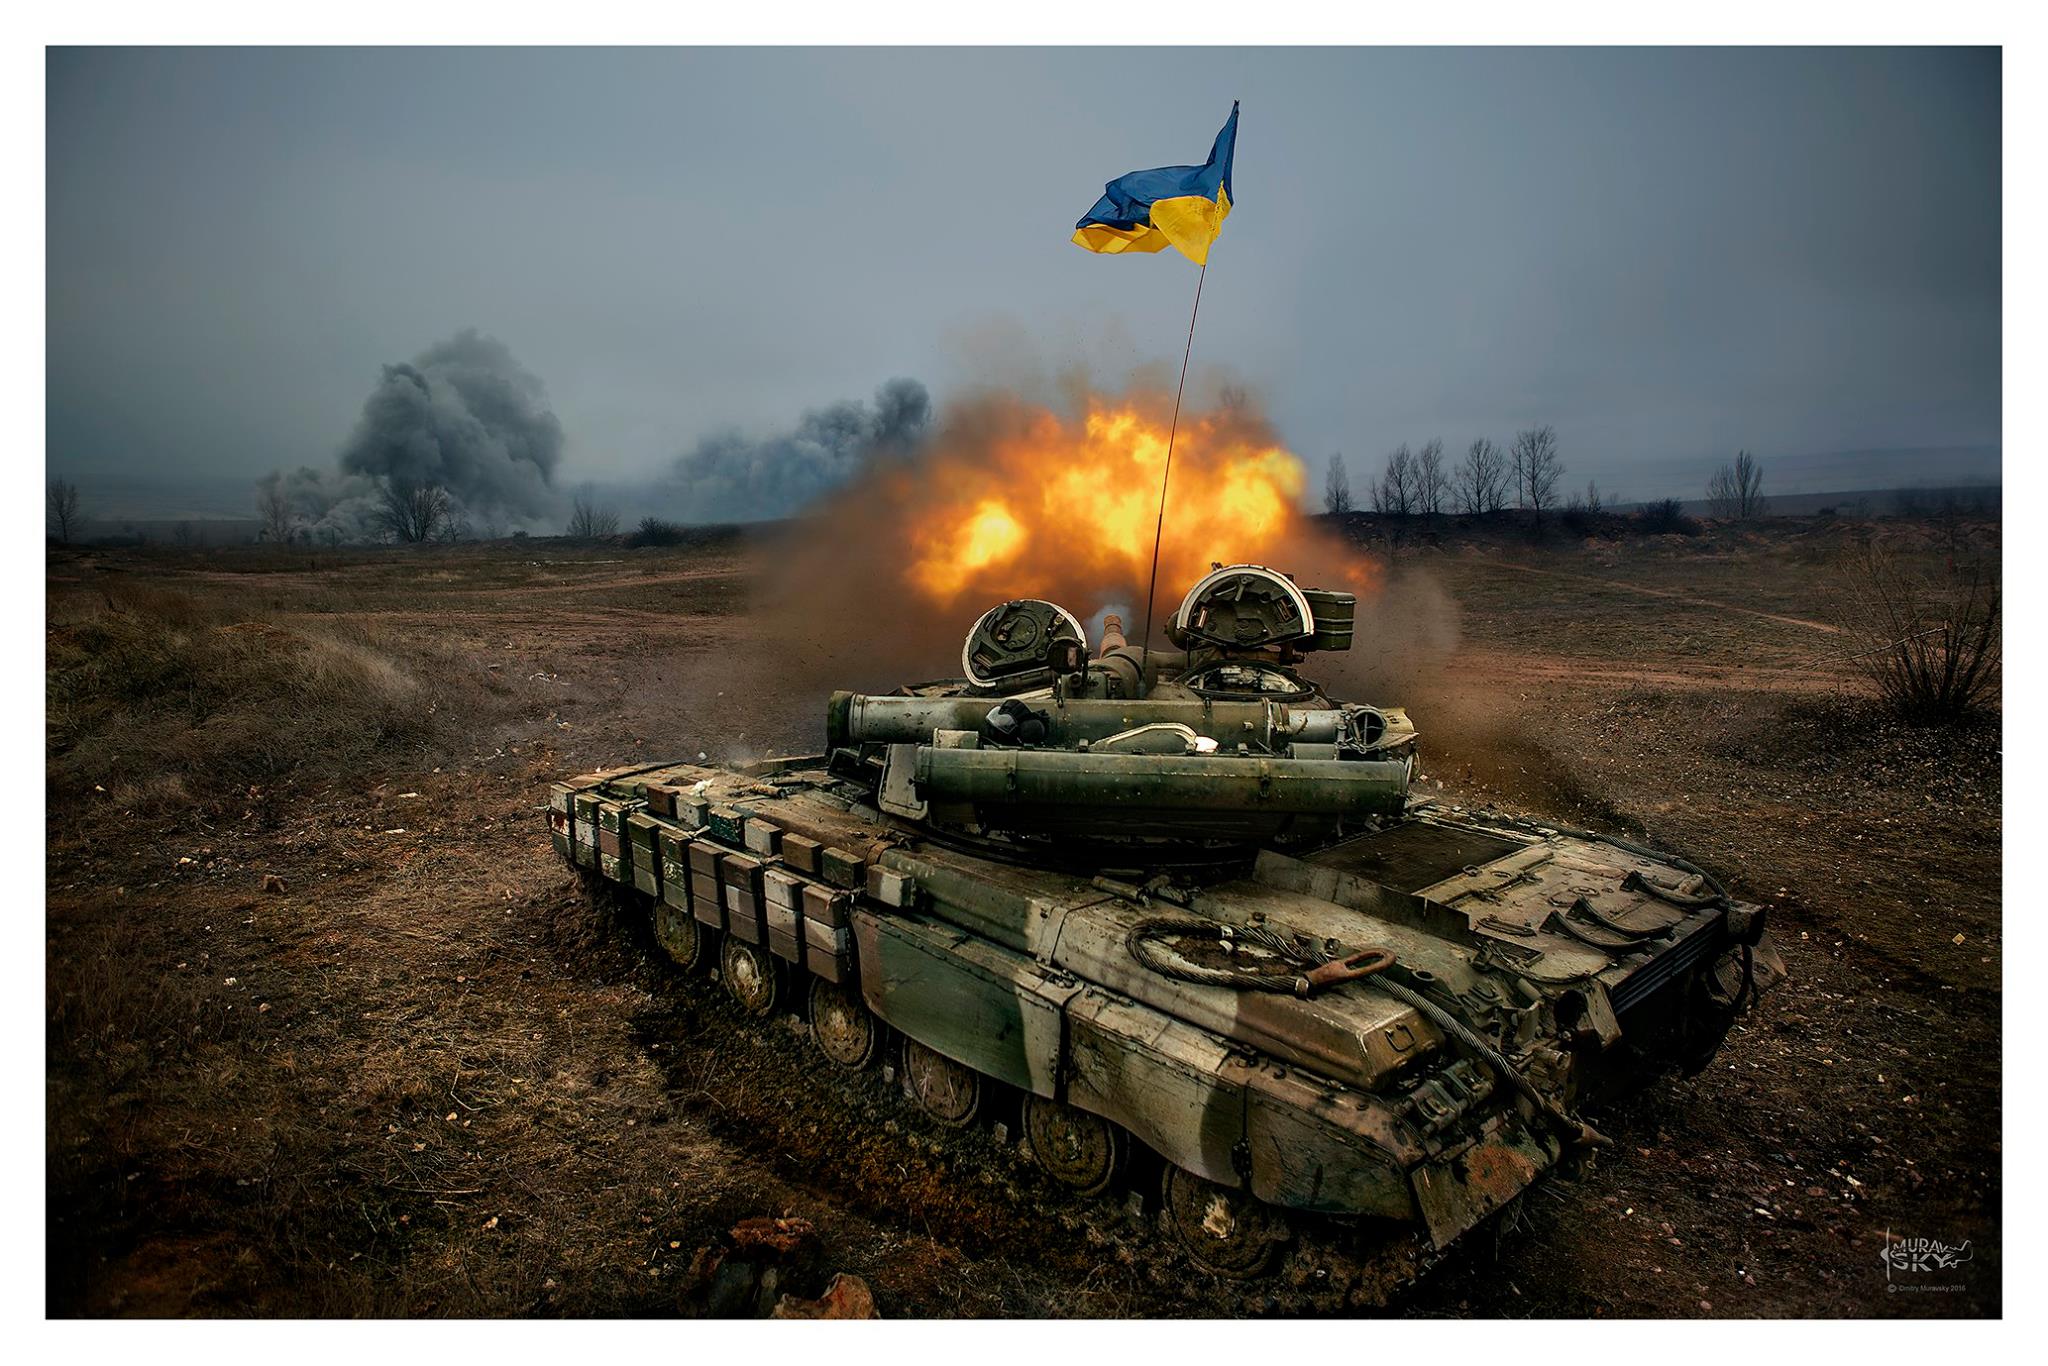 Camo-coloured tank with Ukraine flag firing a round on barren land